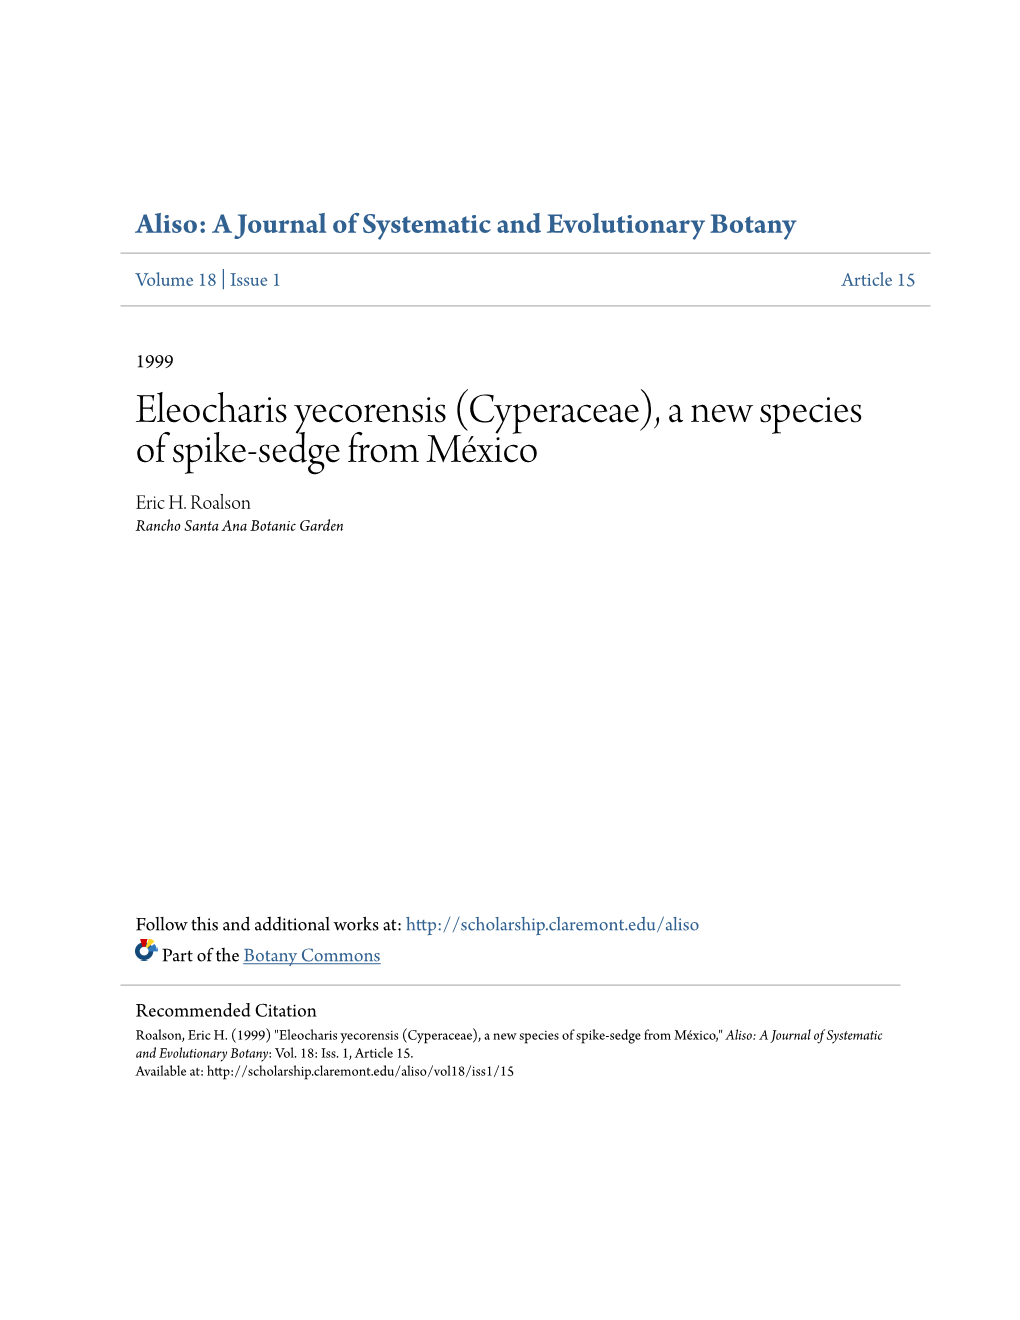 Eleocharis Yecorensis (Cyperaceae), a New Species of Spike-Sedge from México Eric H